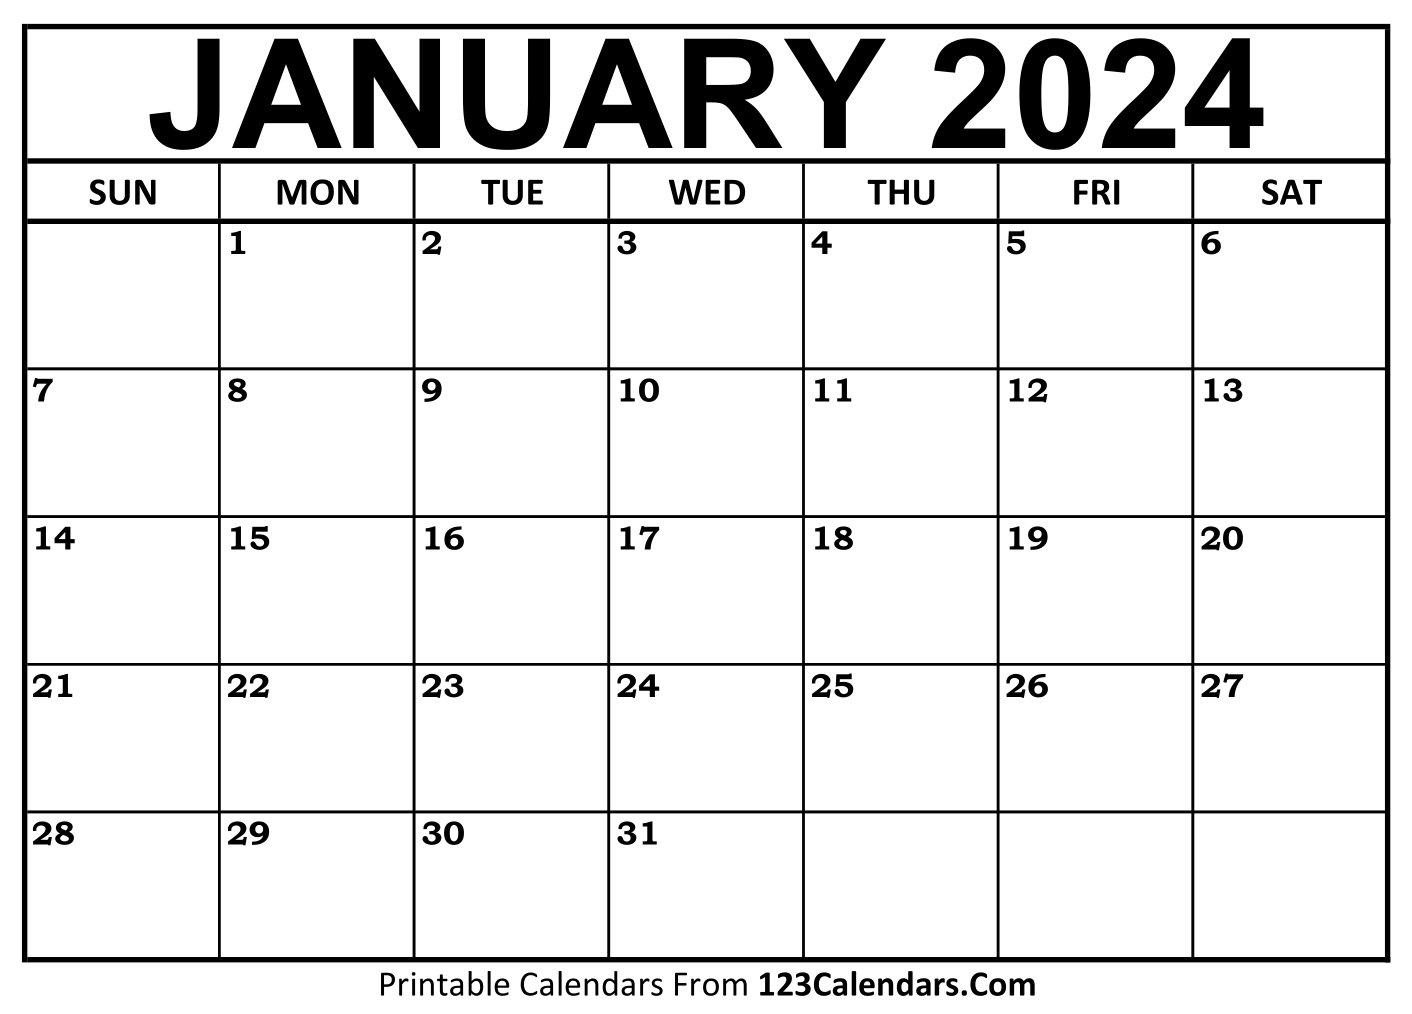 Printable January 2024 Calendar Templates - 123Calendars | Printable Calendar 2024 January Free